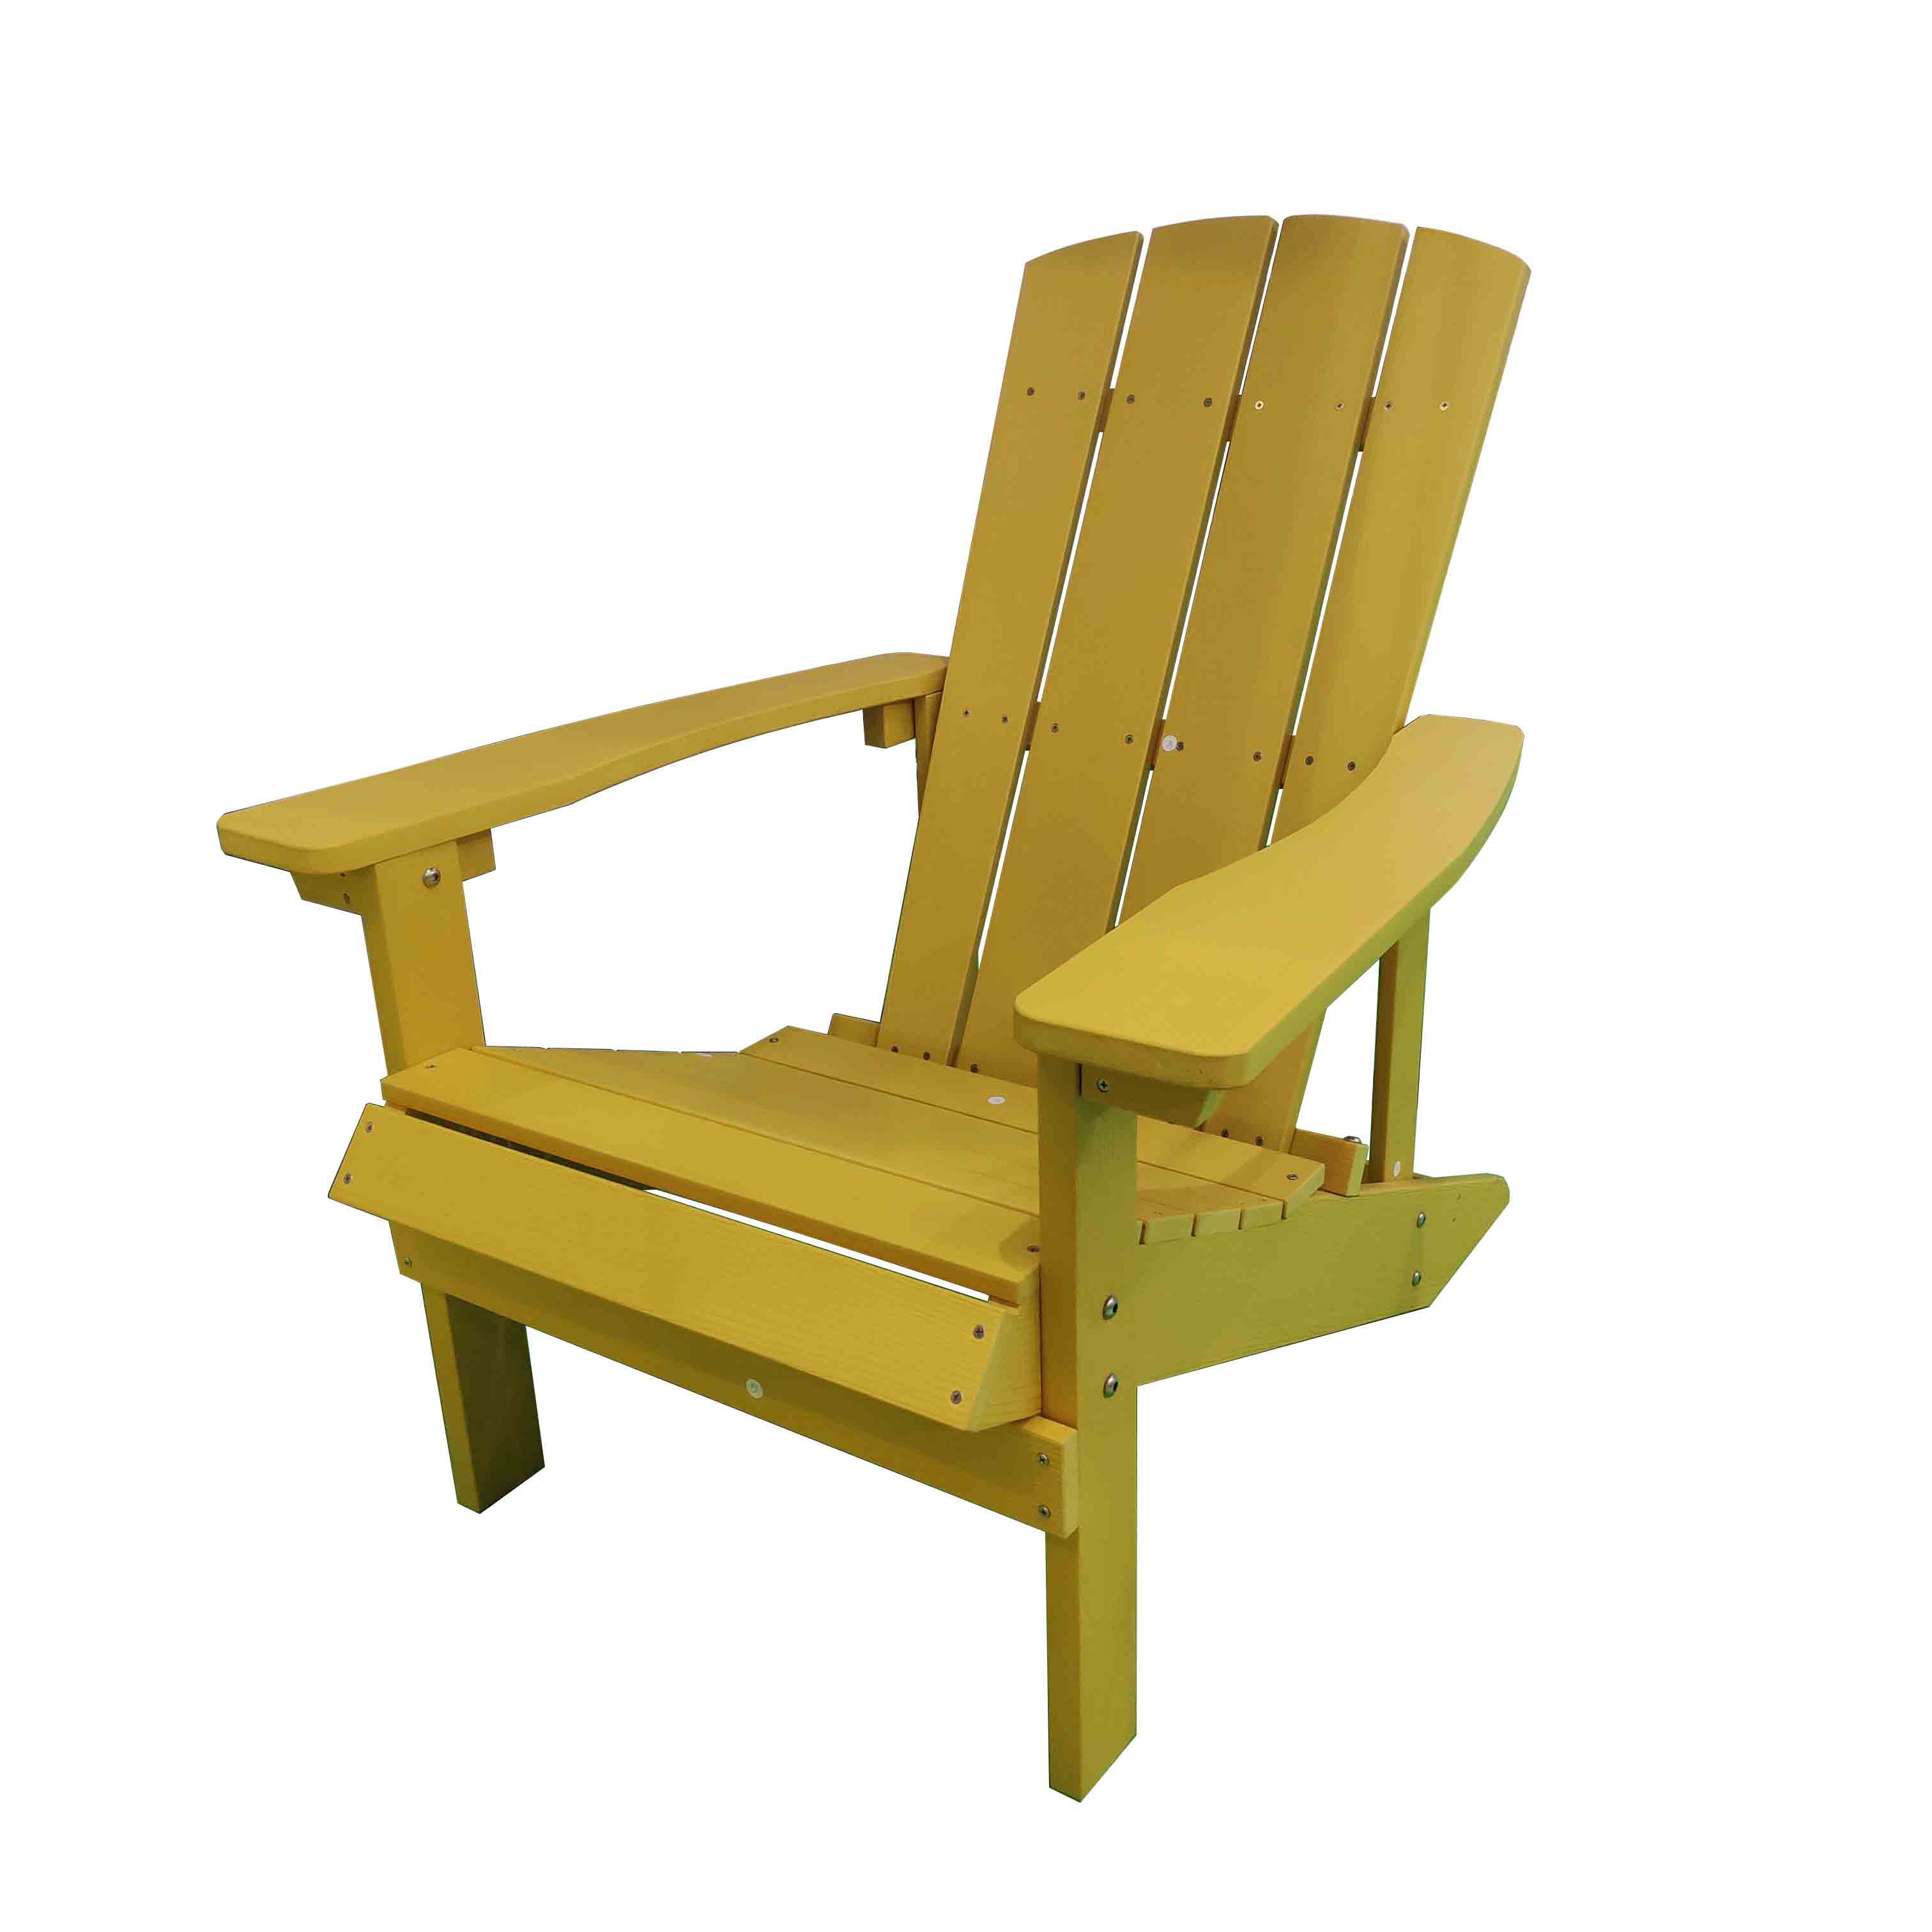 Cheapest Factory American Design Sofa Set - JJ-C14501-YLW-GG PS wood Adirondack chair – Jin-jiang Industry